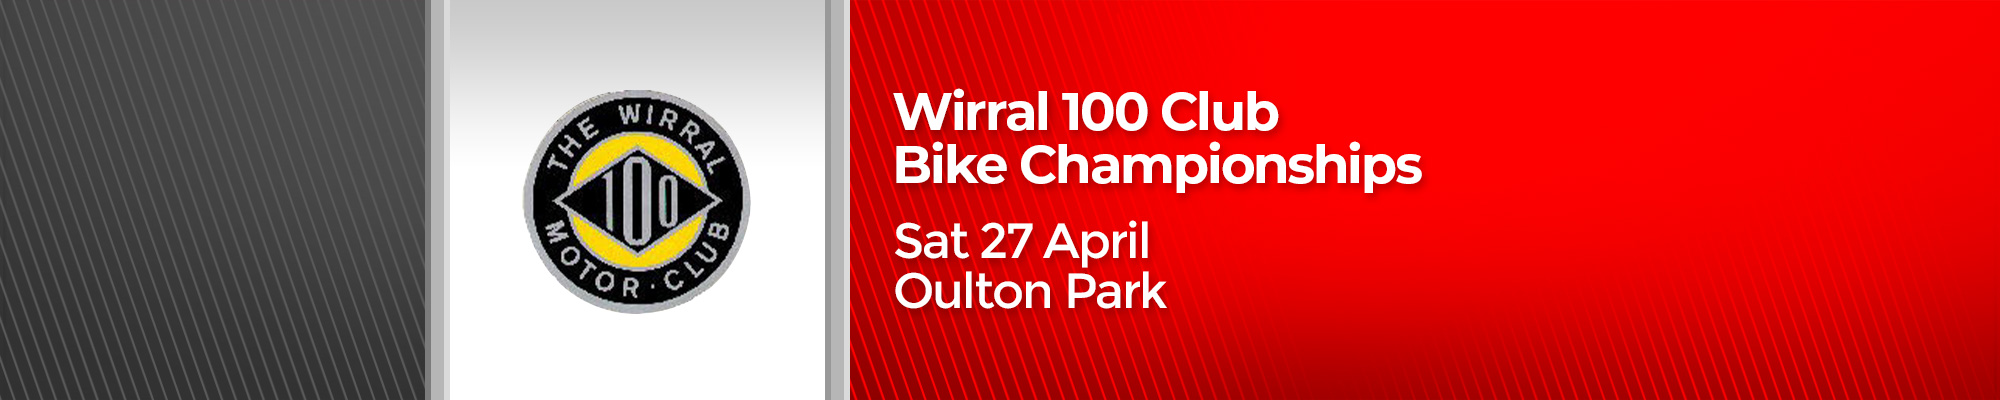 Wirral 100 Club Bike Championships